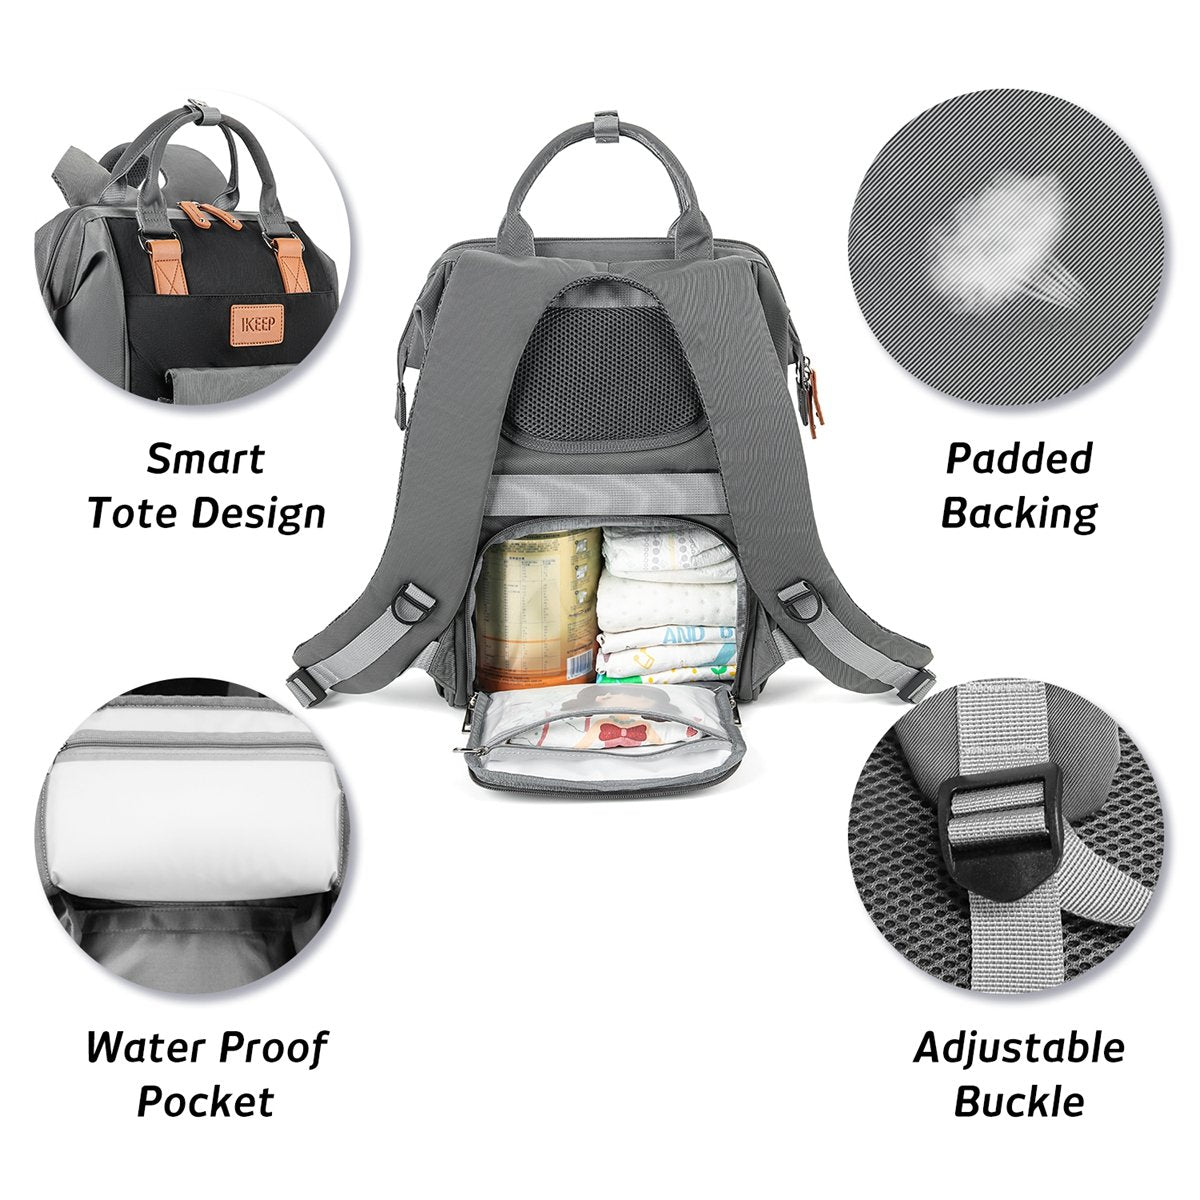 iKeep<sup>&reg;</sup> Crazy Pockets Backpack Diaper Bag - Grey